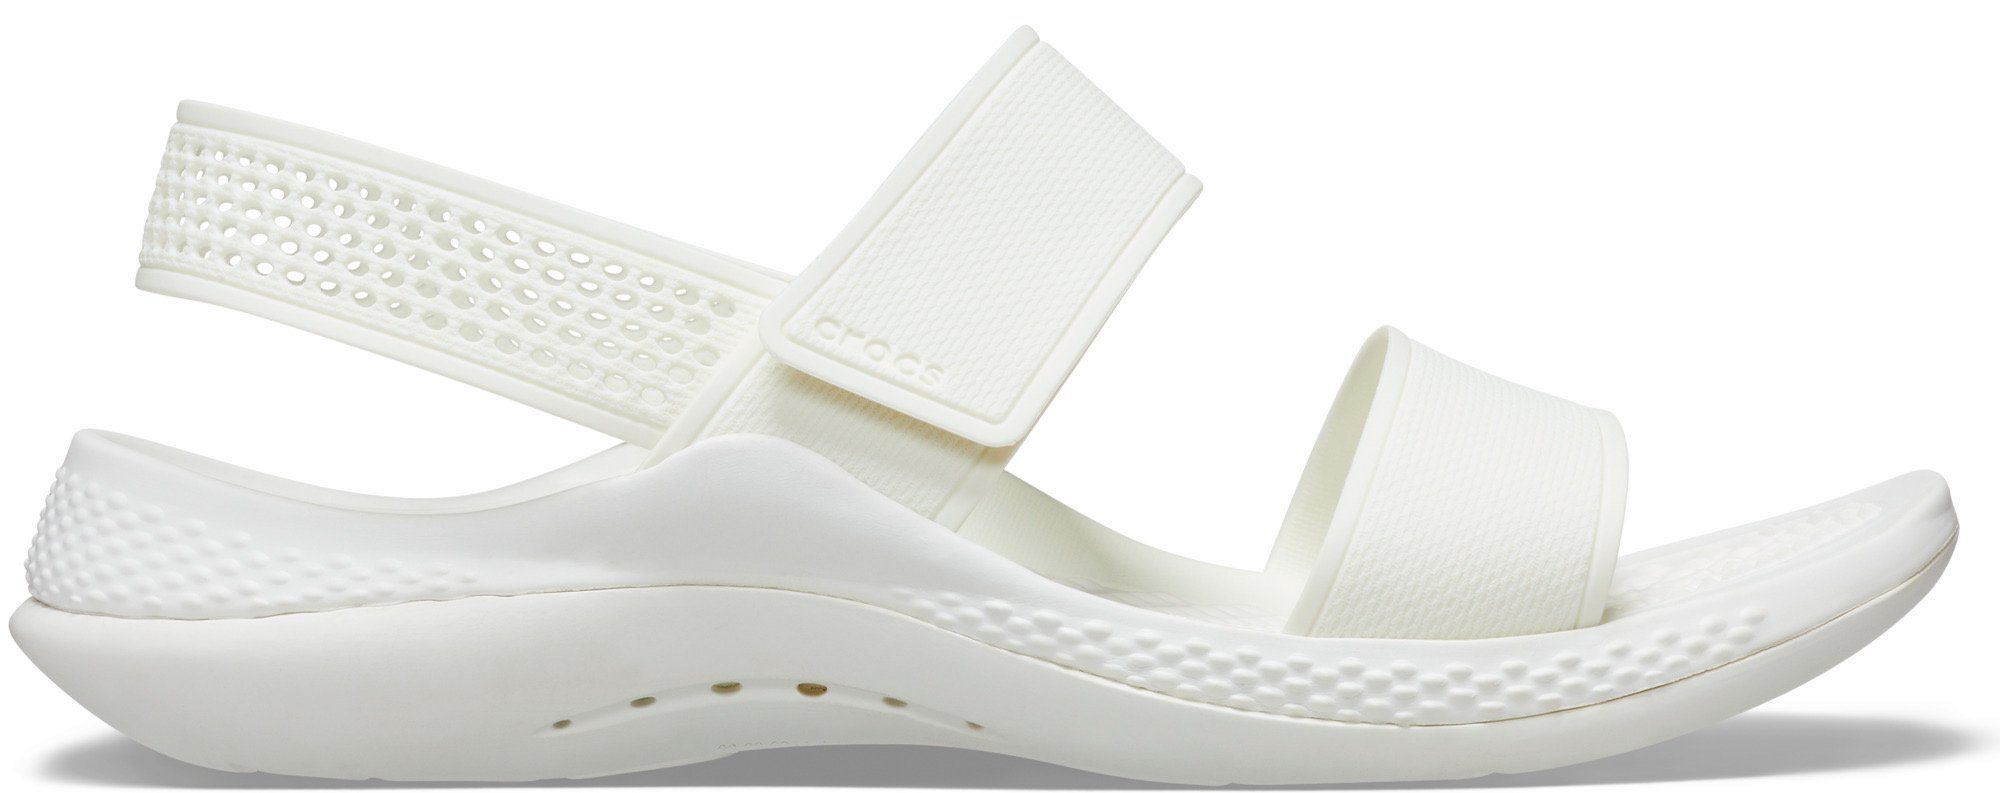 mit LiteRide flexibler weiß 360 Crocs Sandale Sandal Laufsohle